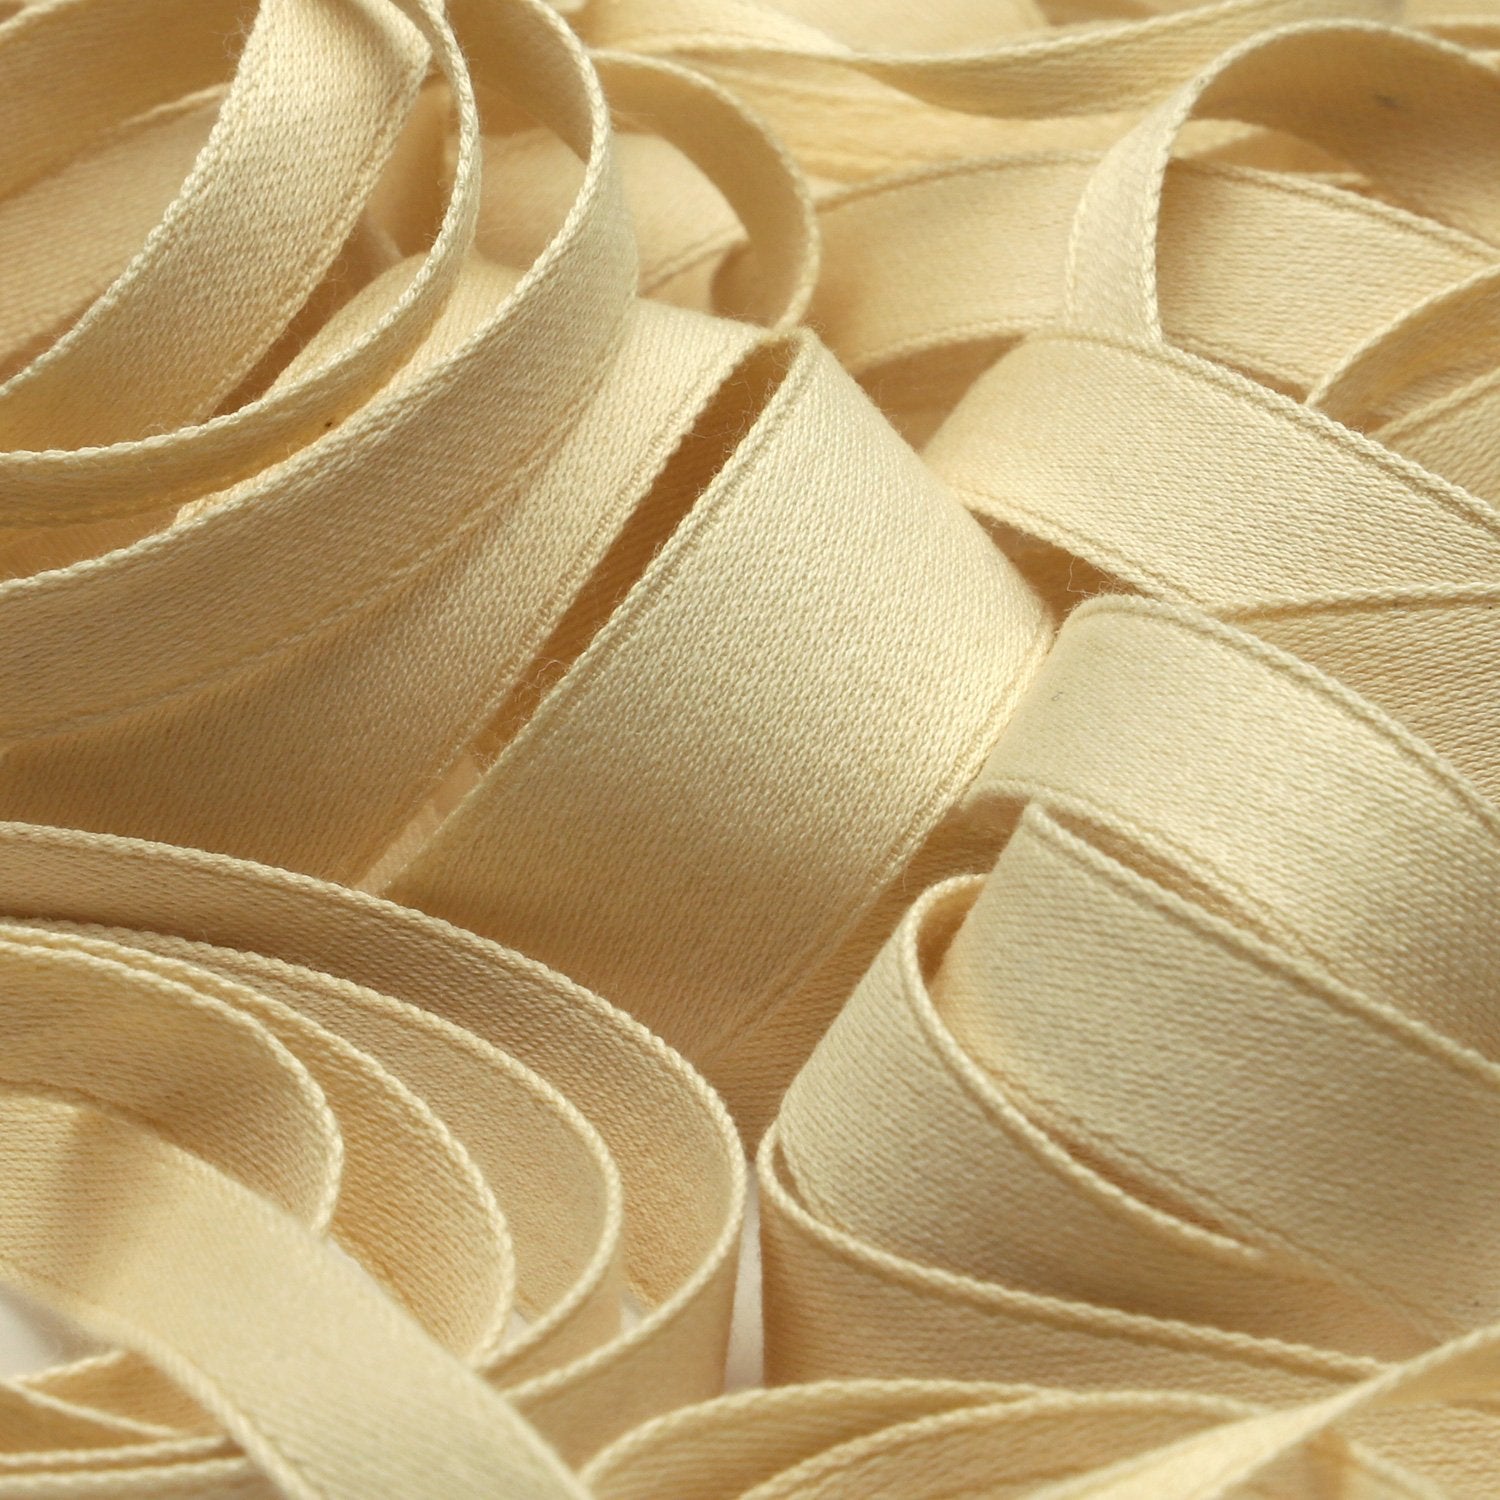 FUJIYAMA RIBBON [Wholesale] Organic Cotton Double-Face Satin Ribbon 9mm Ecru 30 Meters Roll